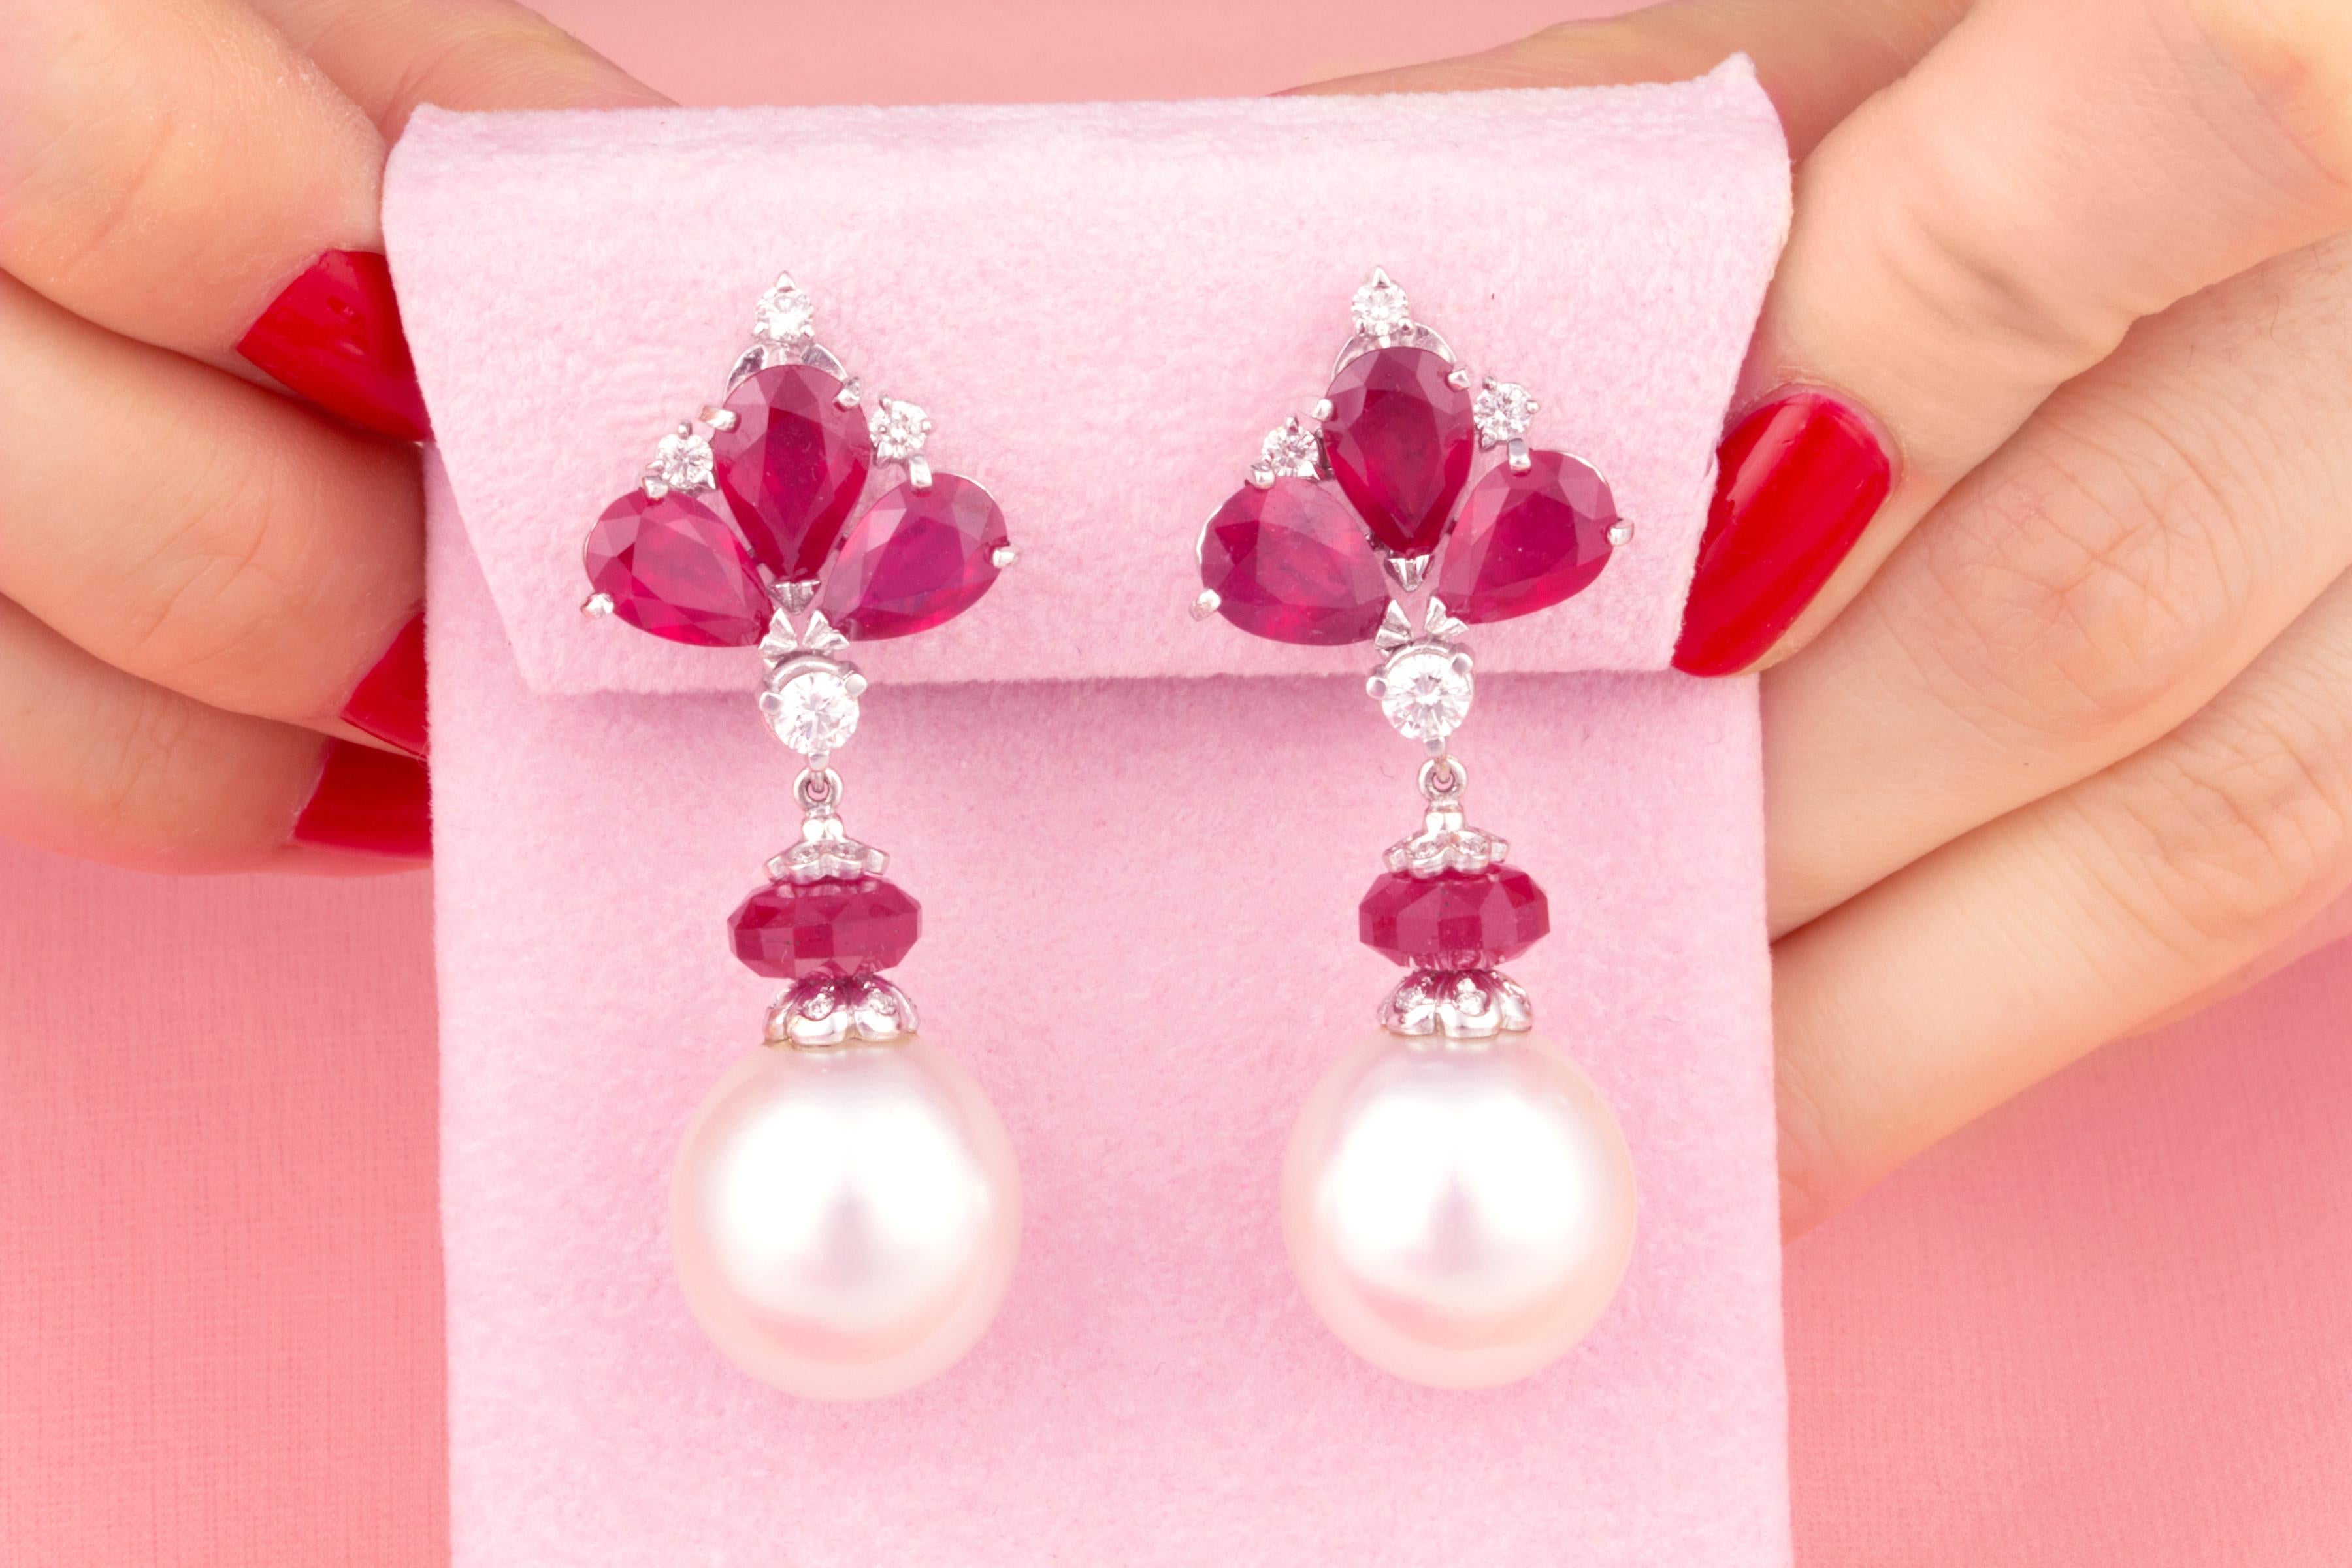 pearl and ruby earrings